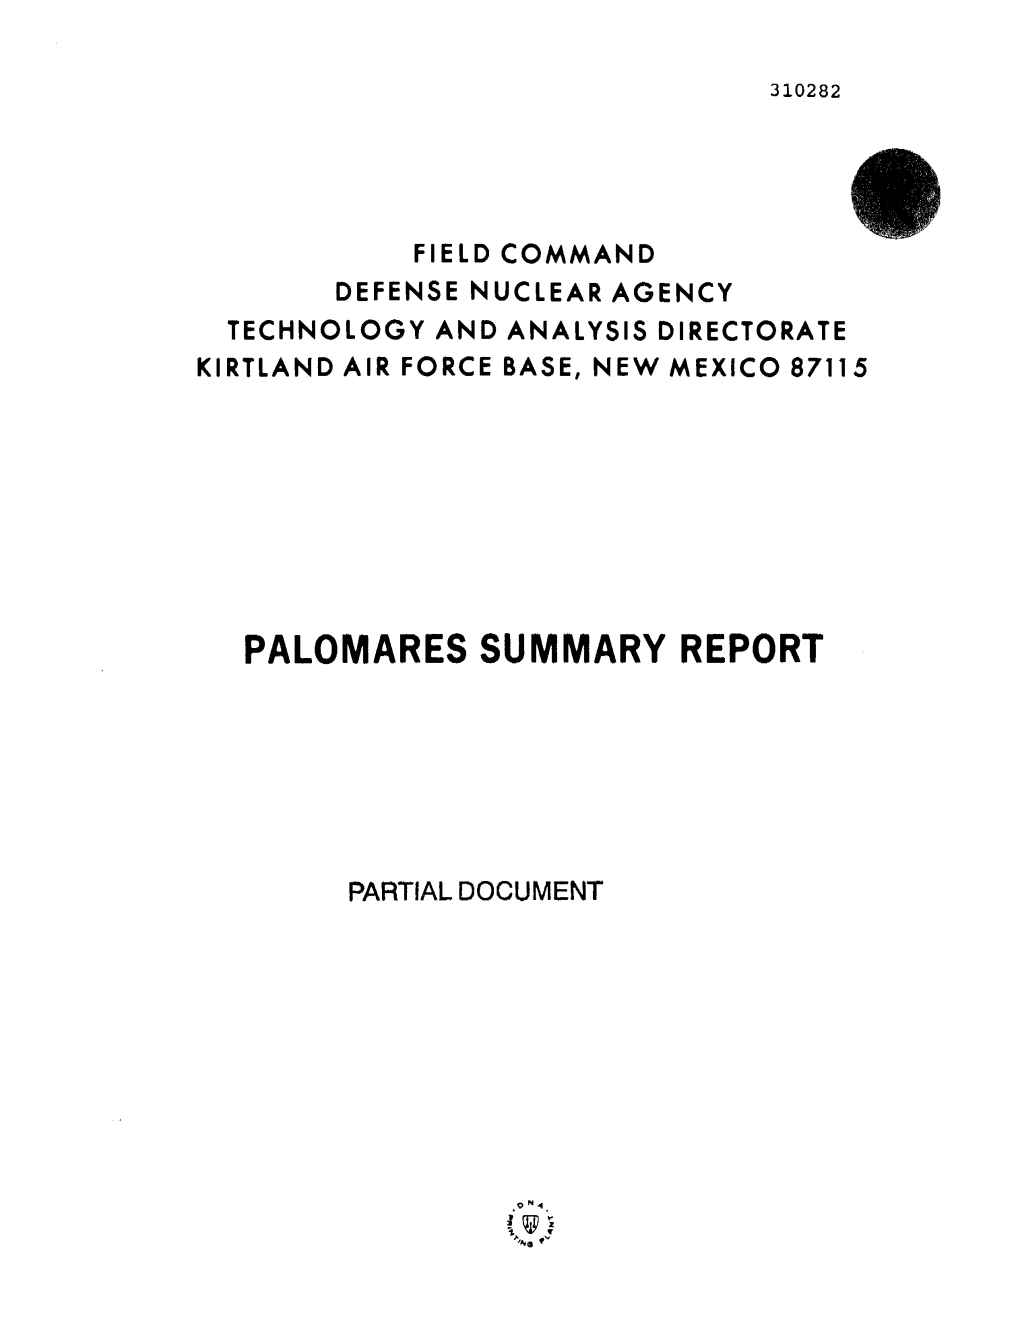 Palomares Summary Report